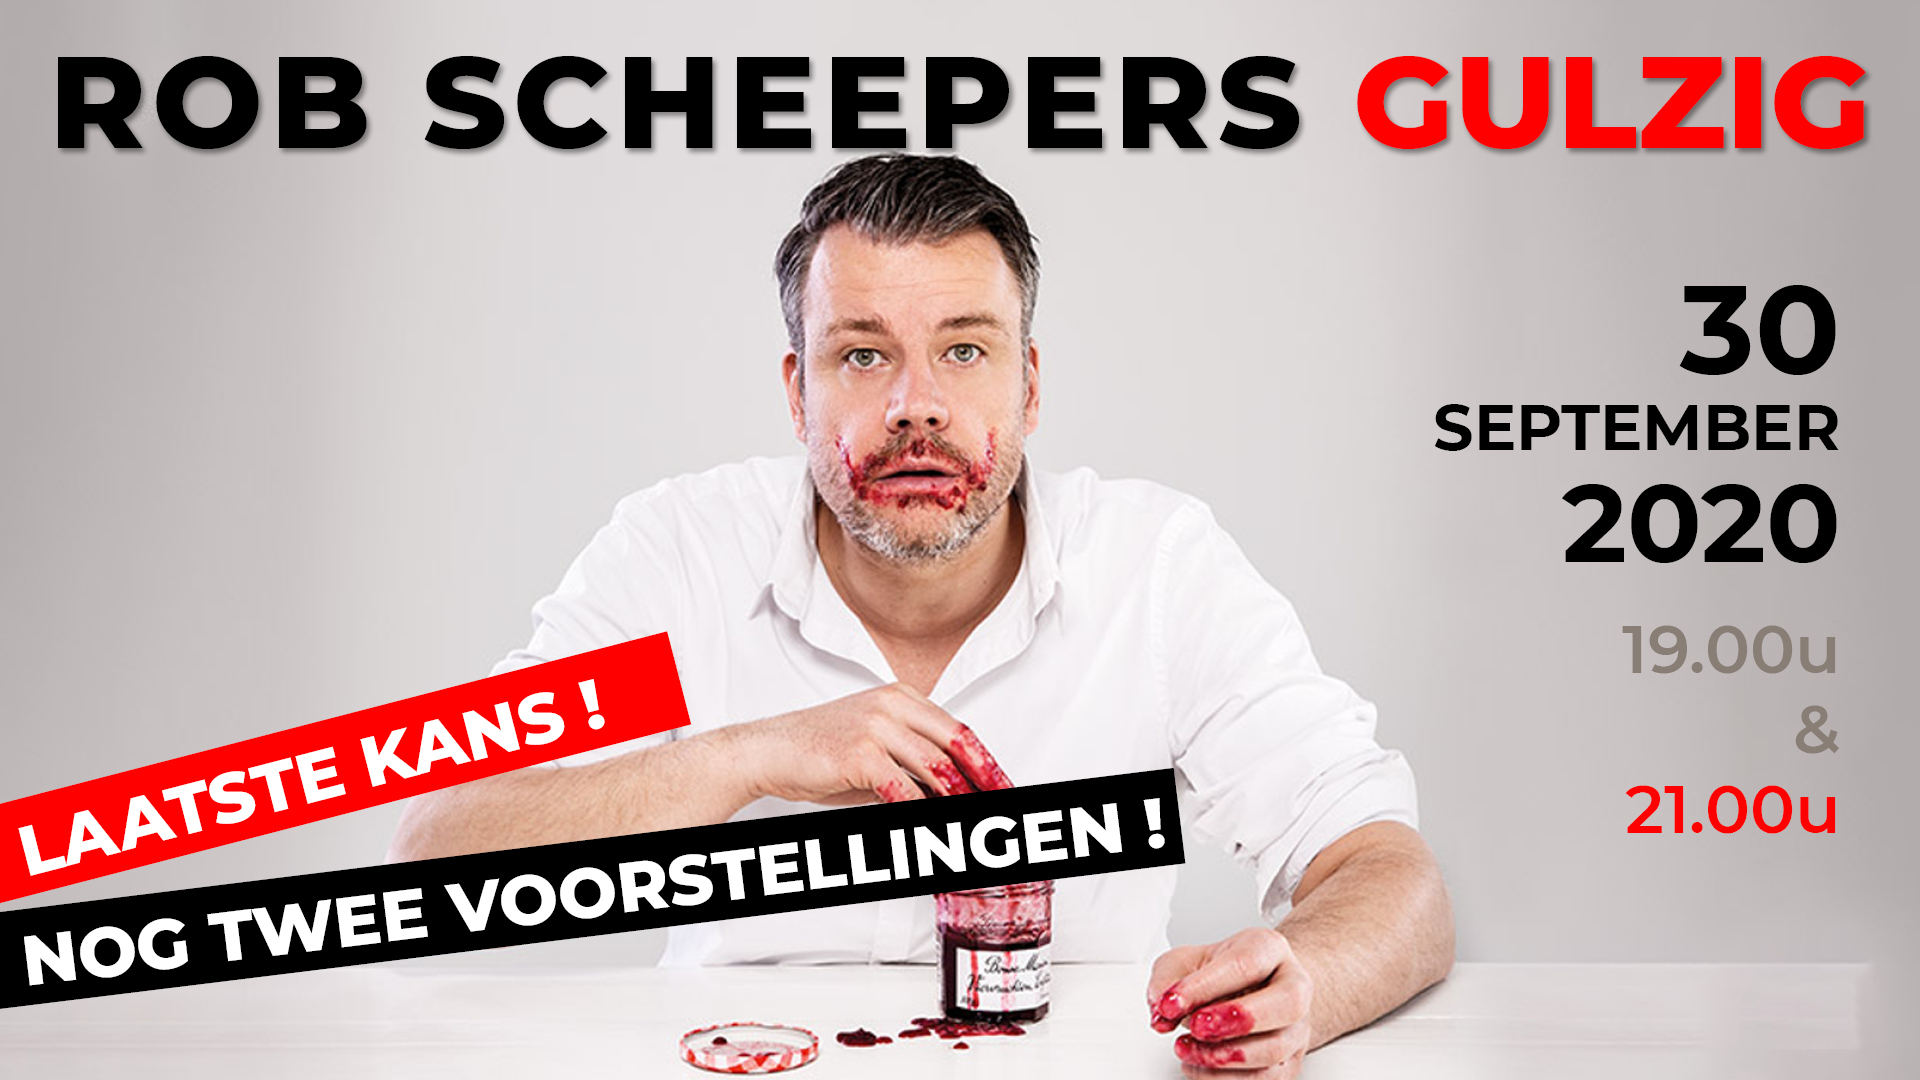 Rob Scheepers 'Gulzig' 21.00u